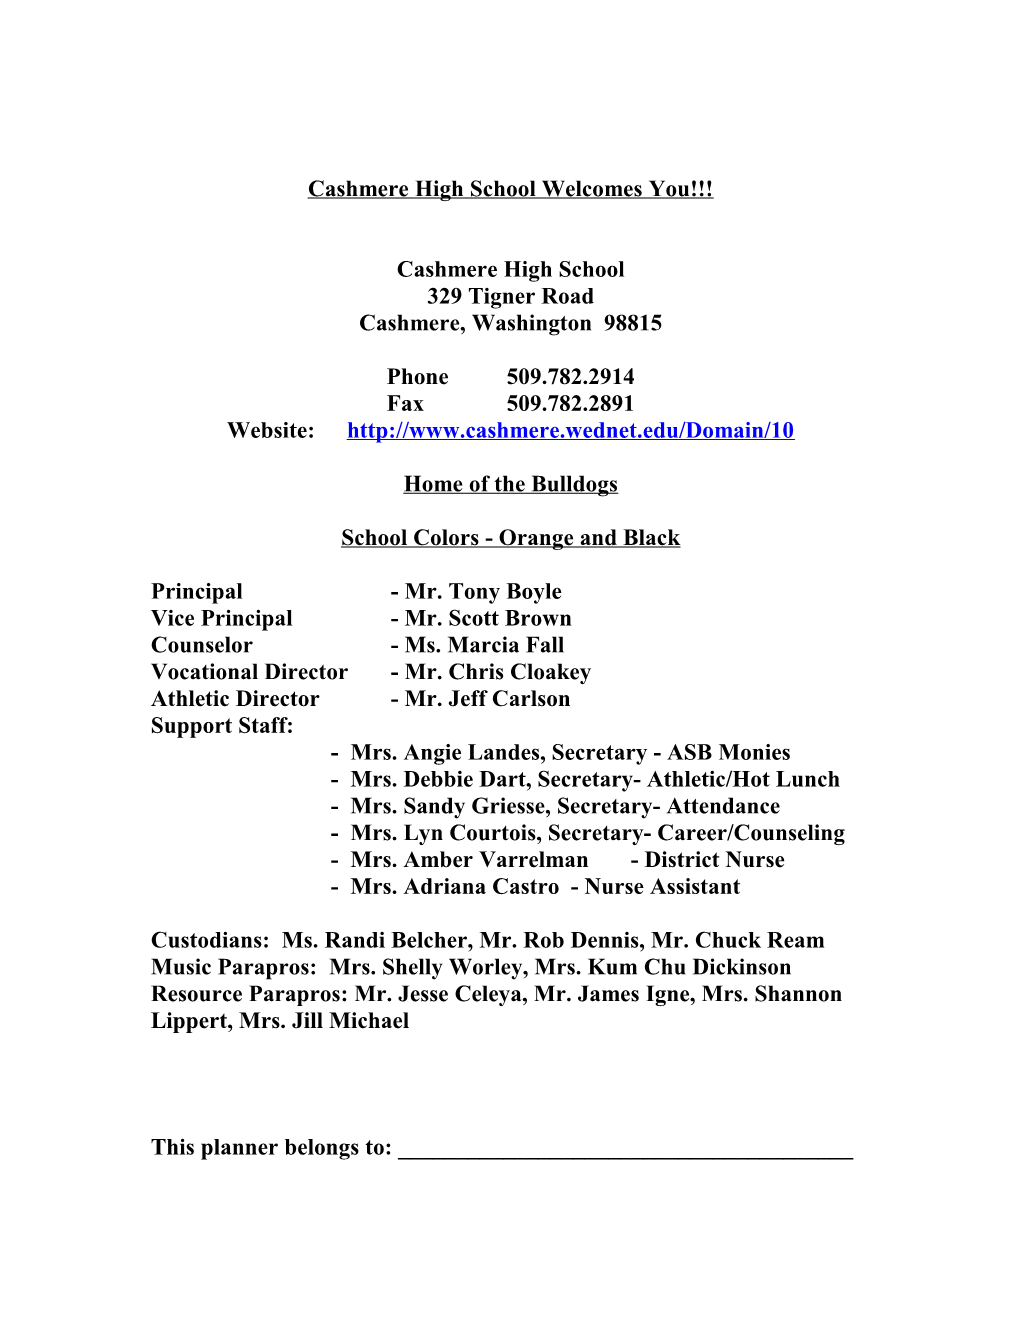 2004-2005 Cashmere High School